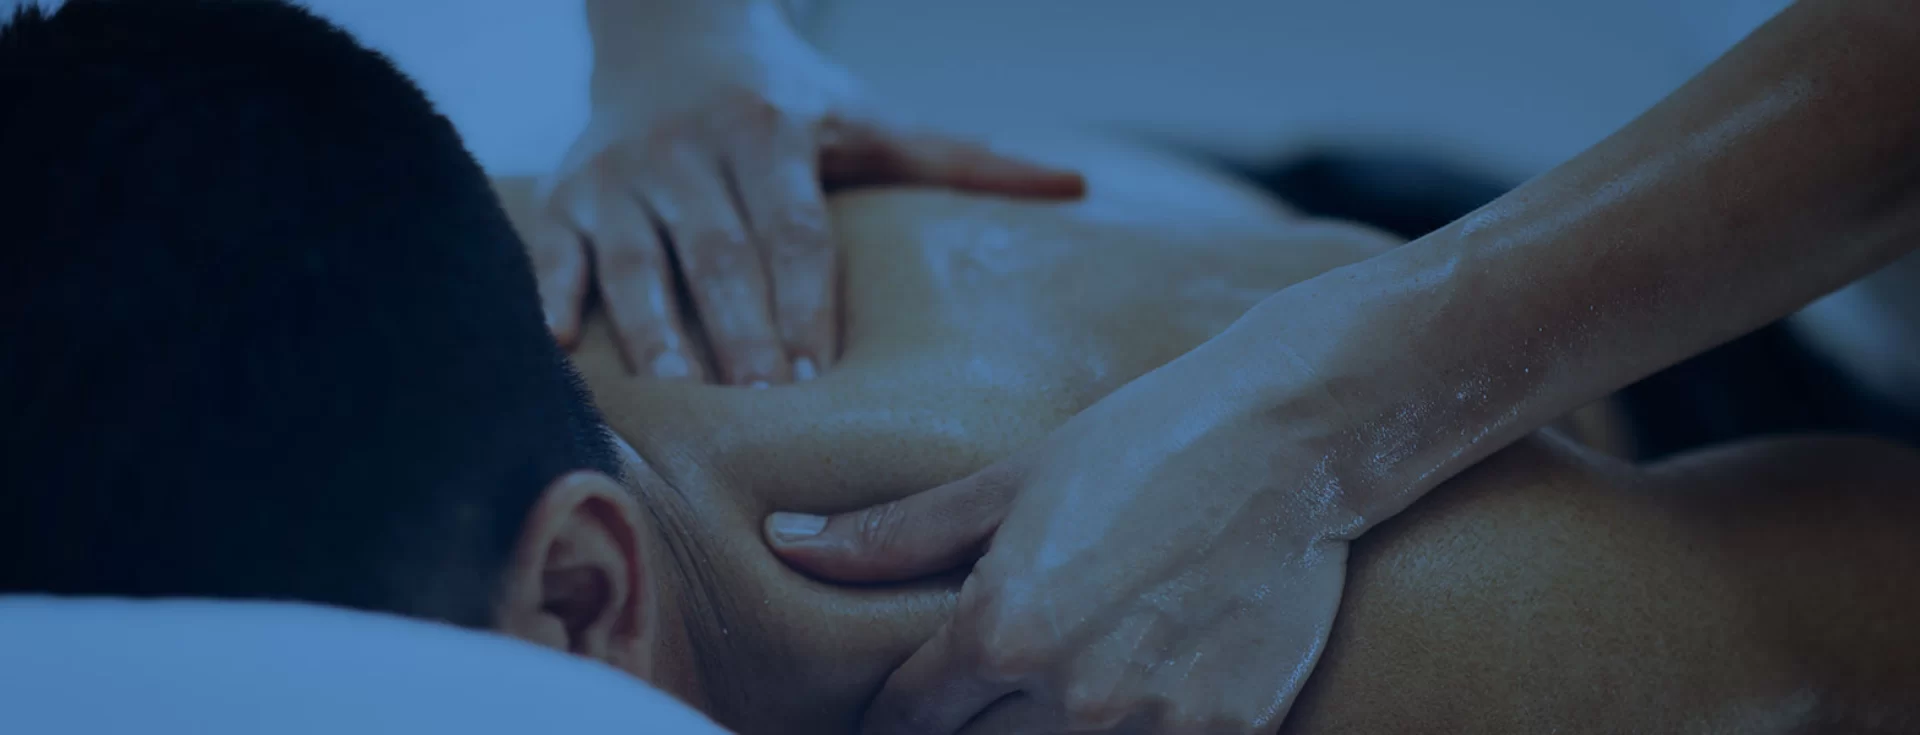 Massage Therapy Training - Swedish Institute Massage School - New York, NY